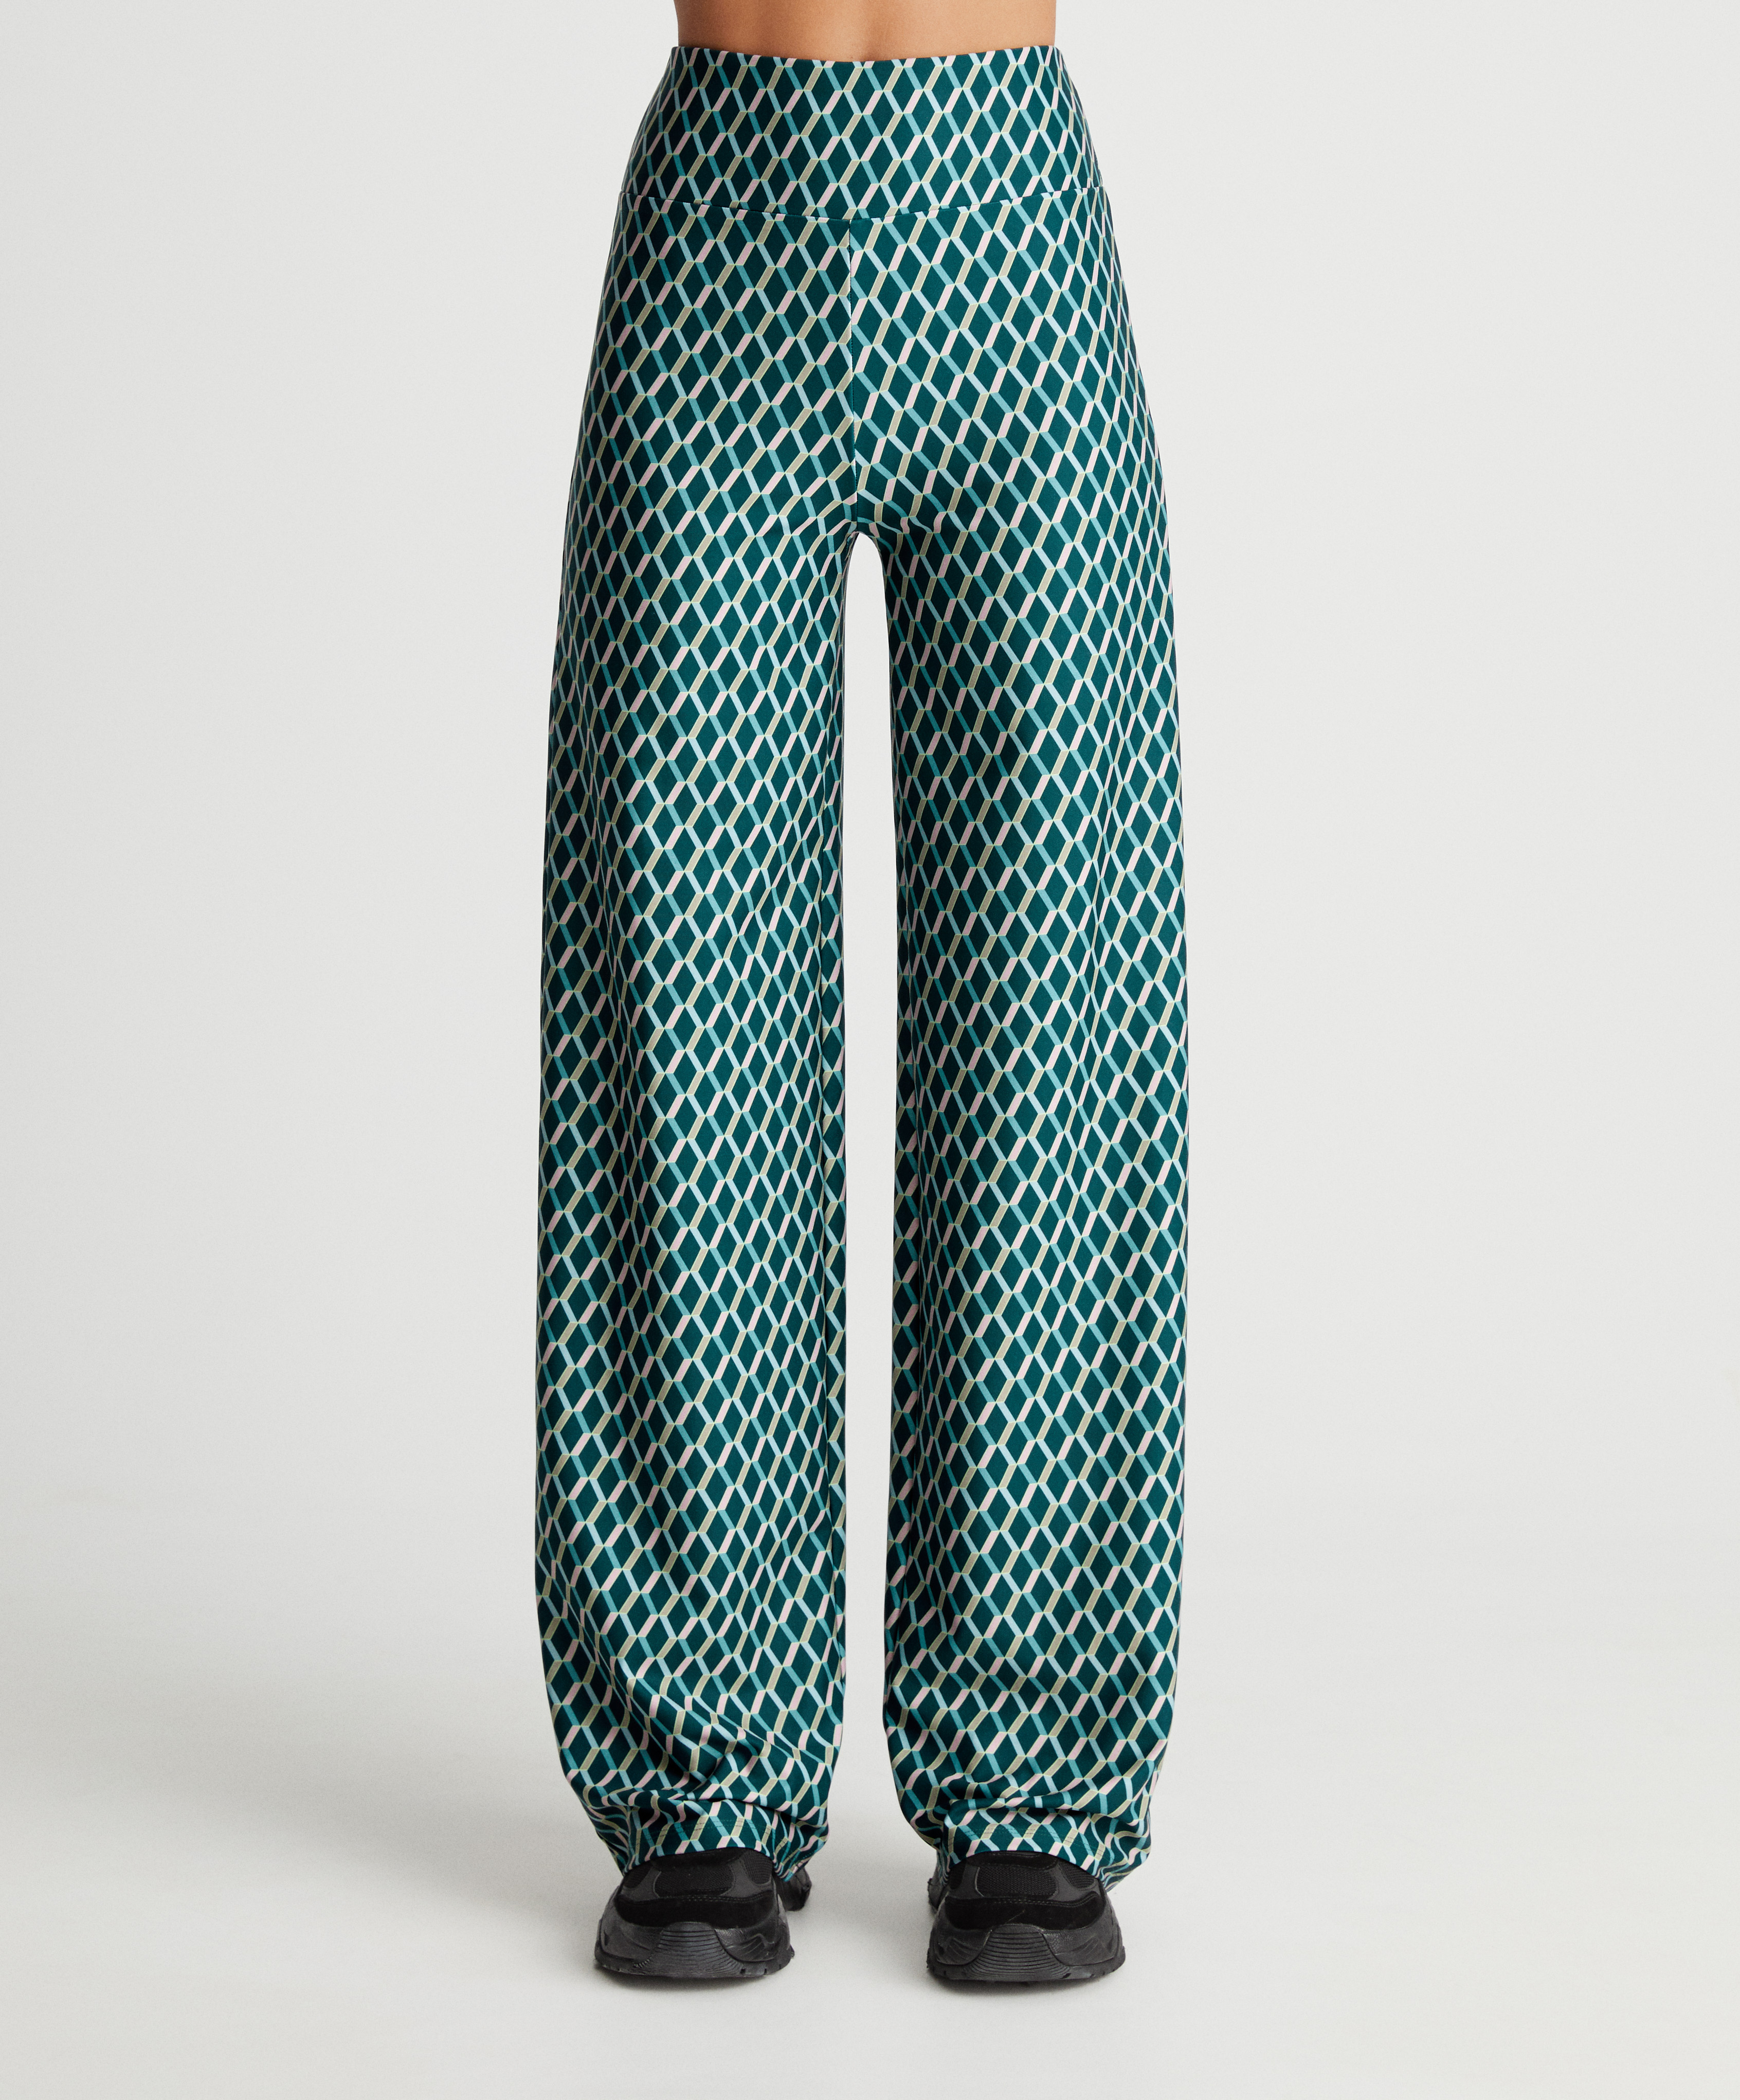 Pantaloni lunghi dritti con stampa geometrica